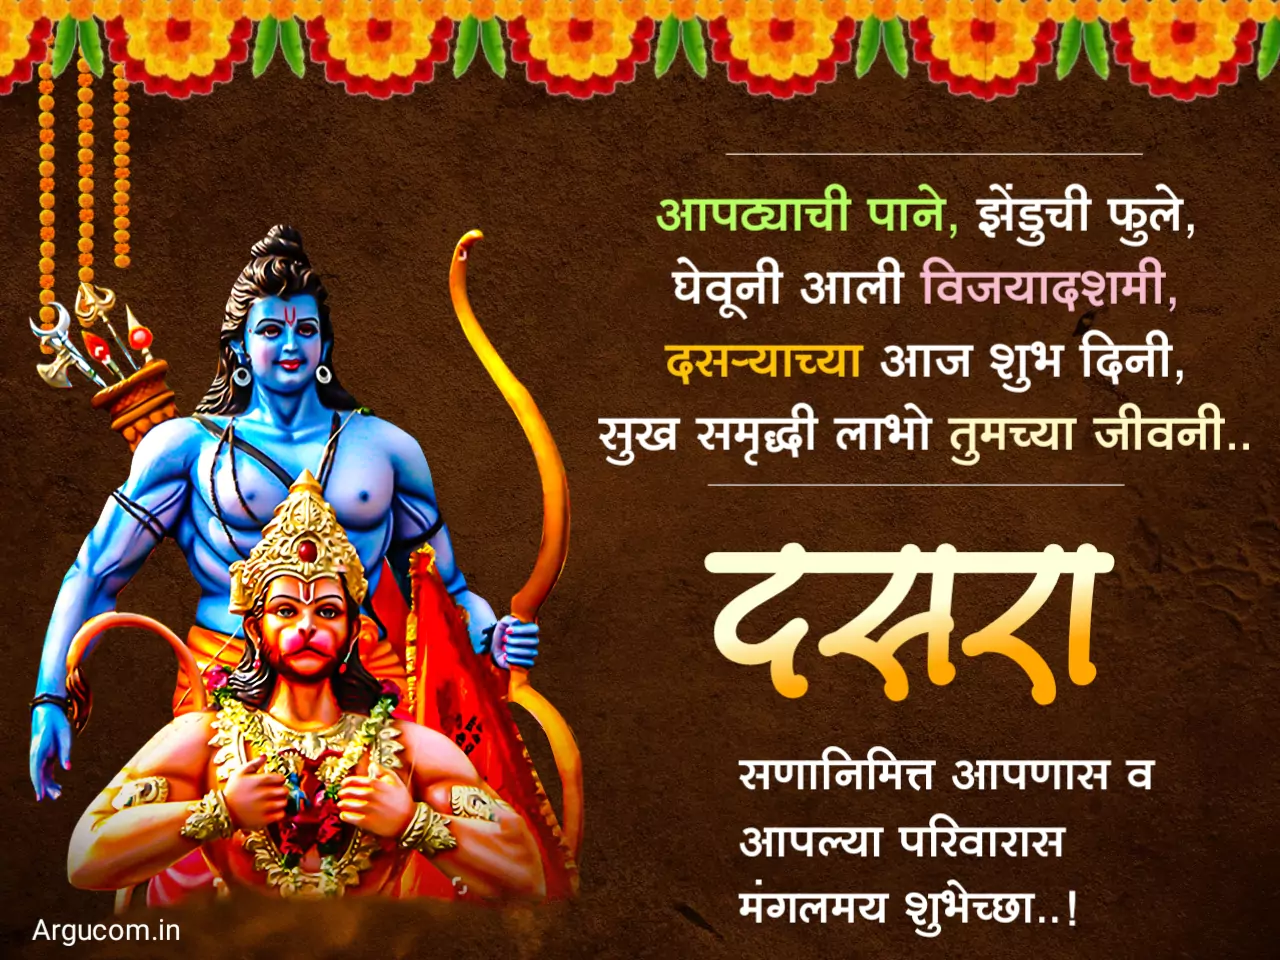 Dasara wishes in marathi , दसरा शुभेच्छा 